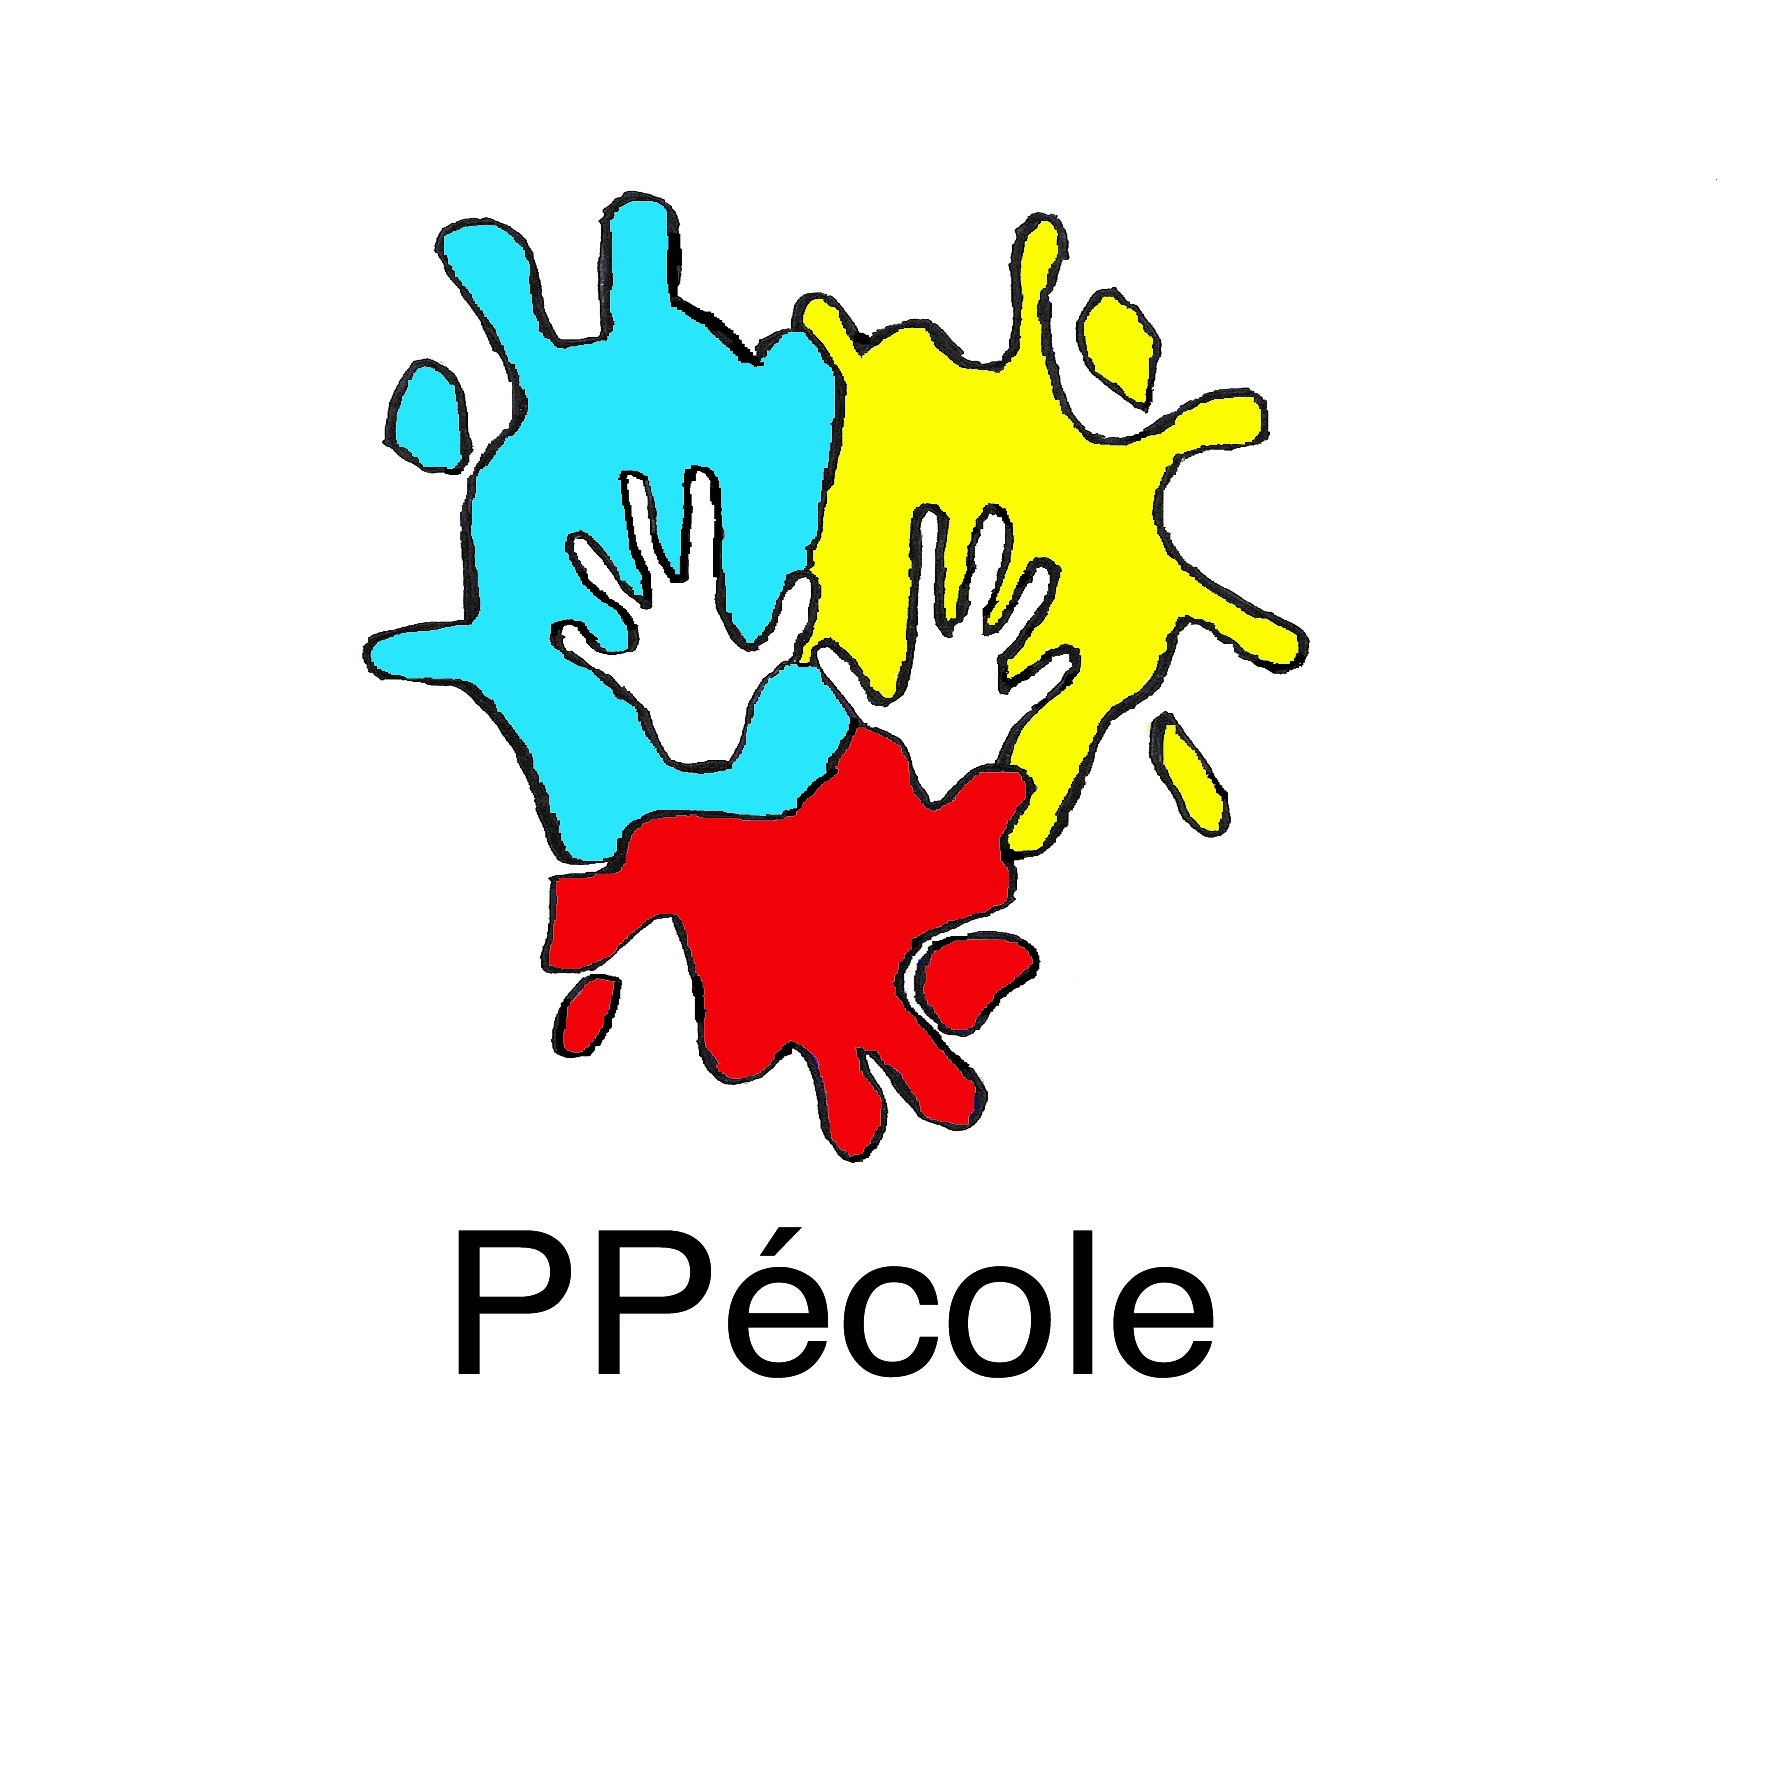 ppecole logo.jpg